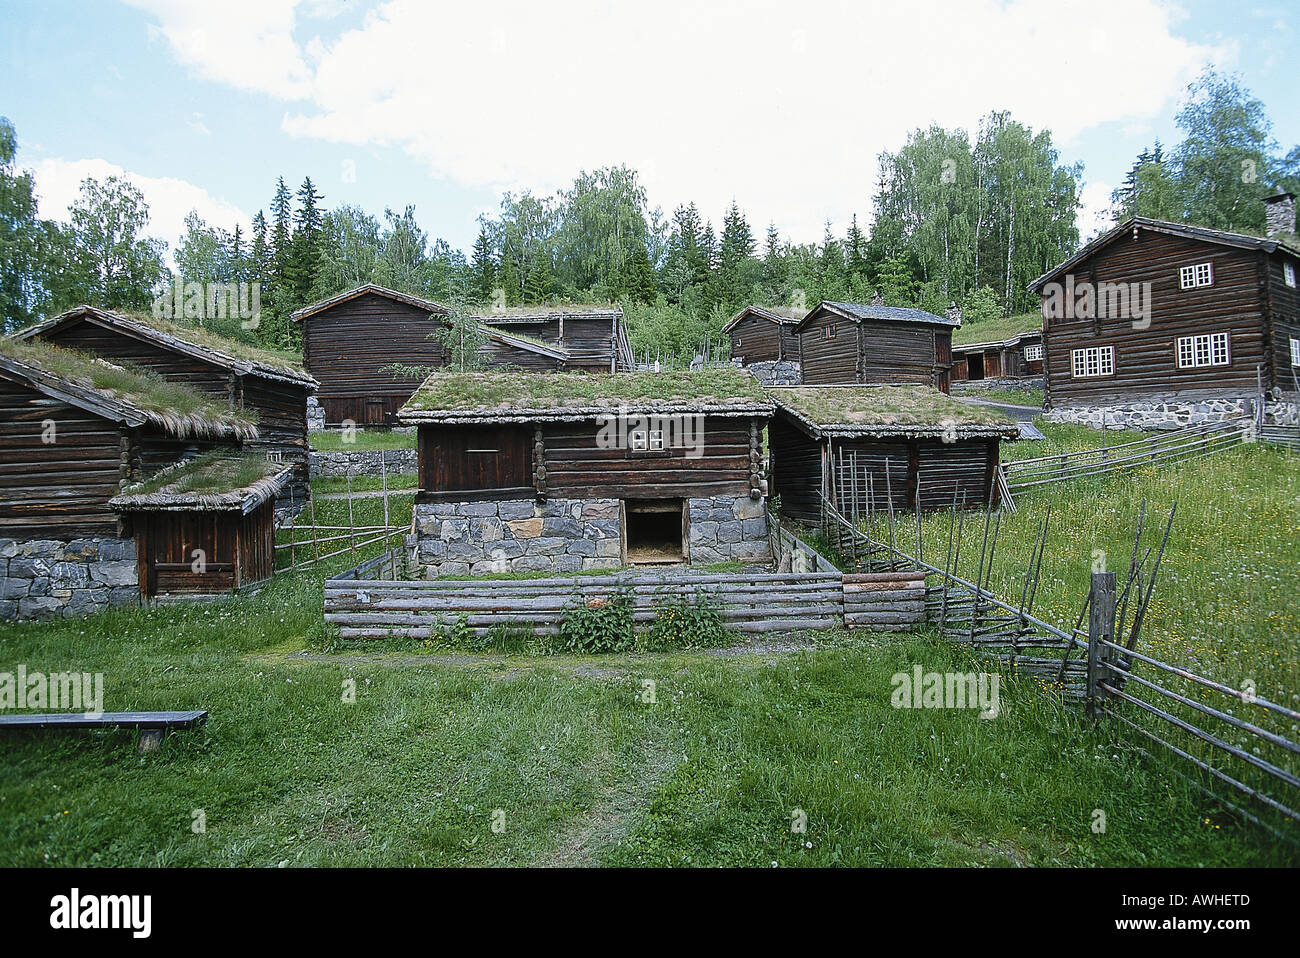 Norway, Eastern Norway, Lillehammer, Mailhaugen, De Sandvigske Samlinger, wooden houses, some with turf roofs Stock Photo